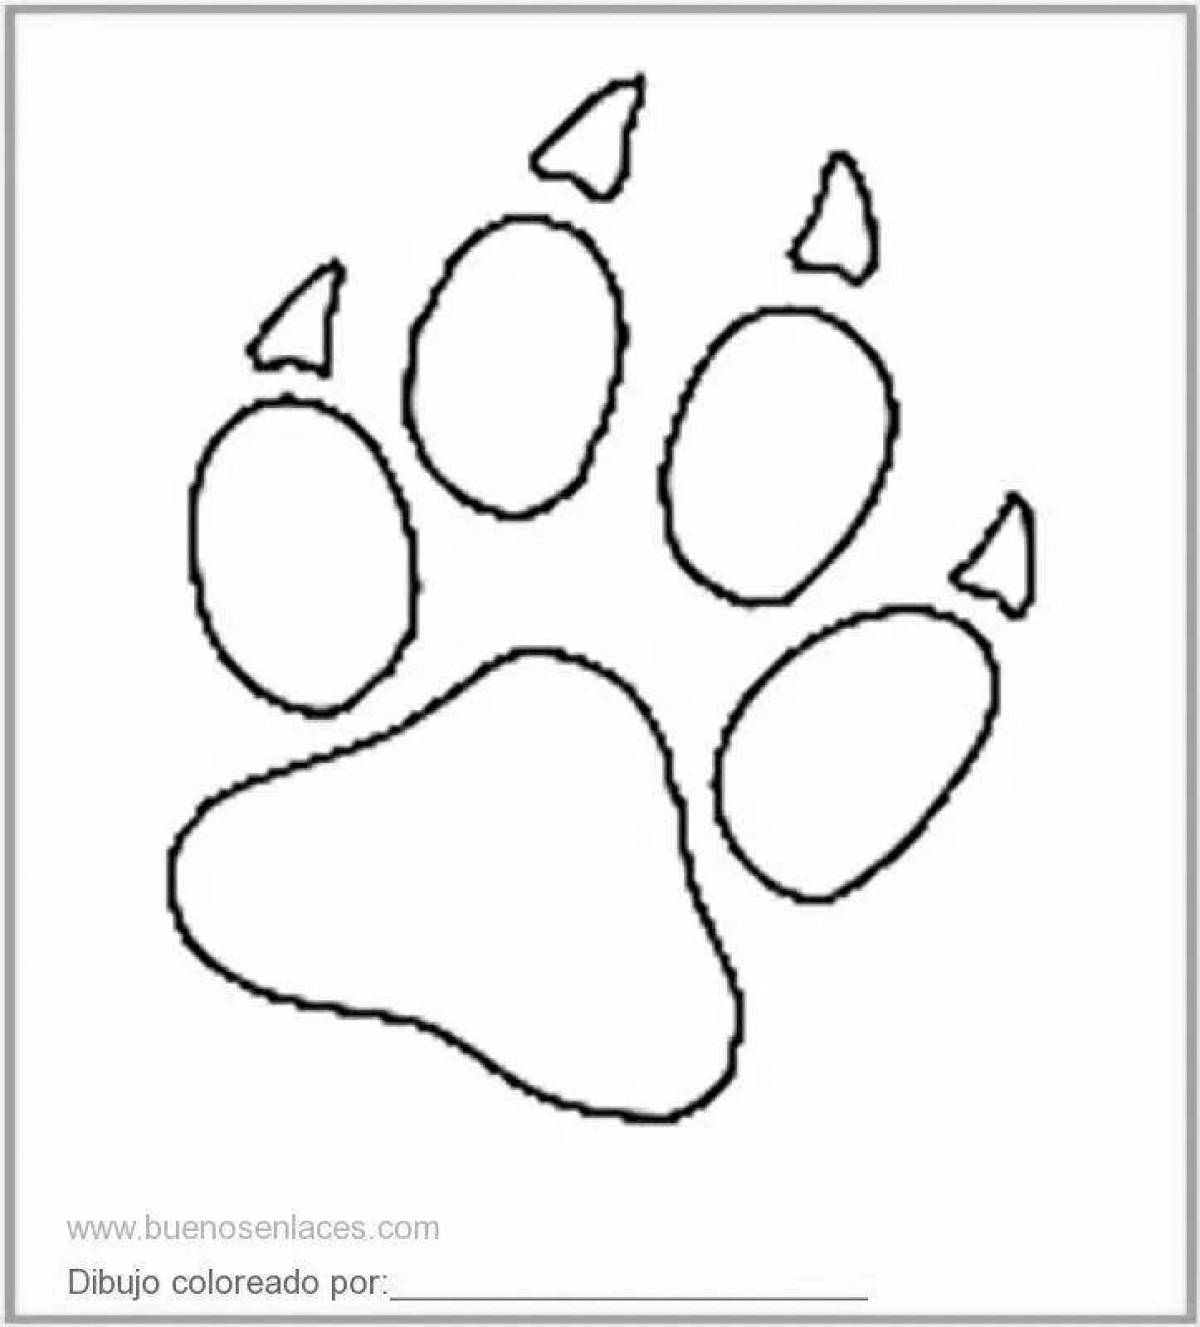 Coloring animal footprints